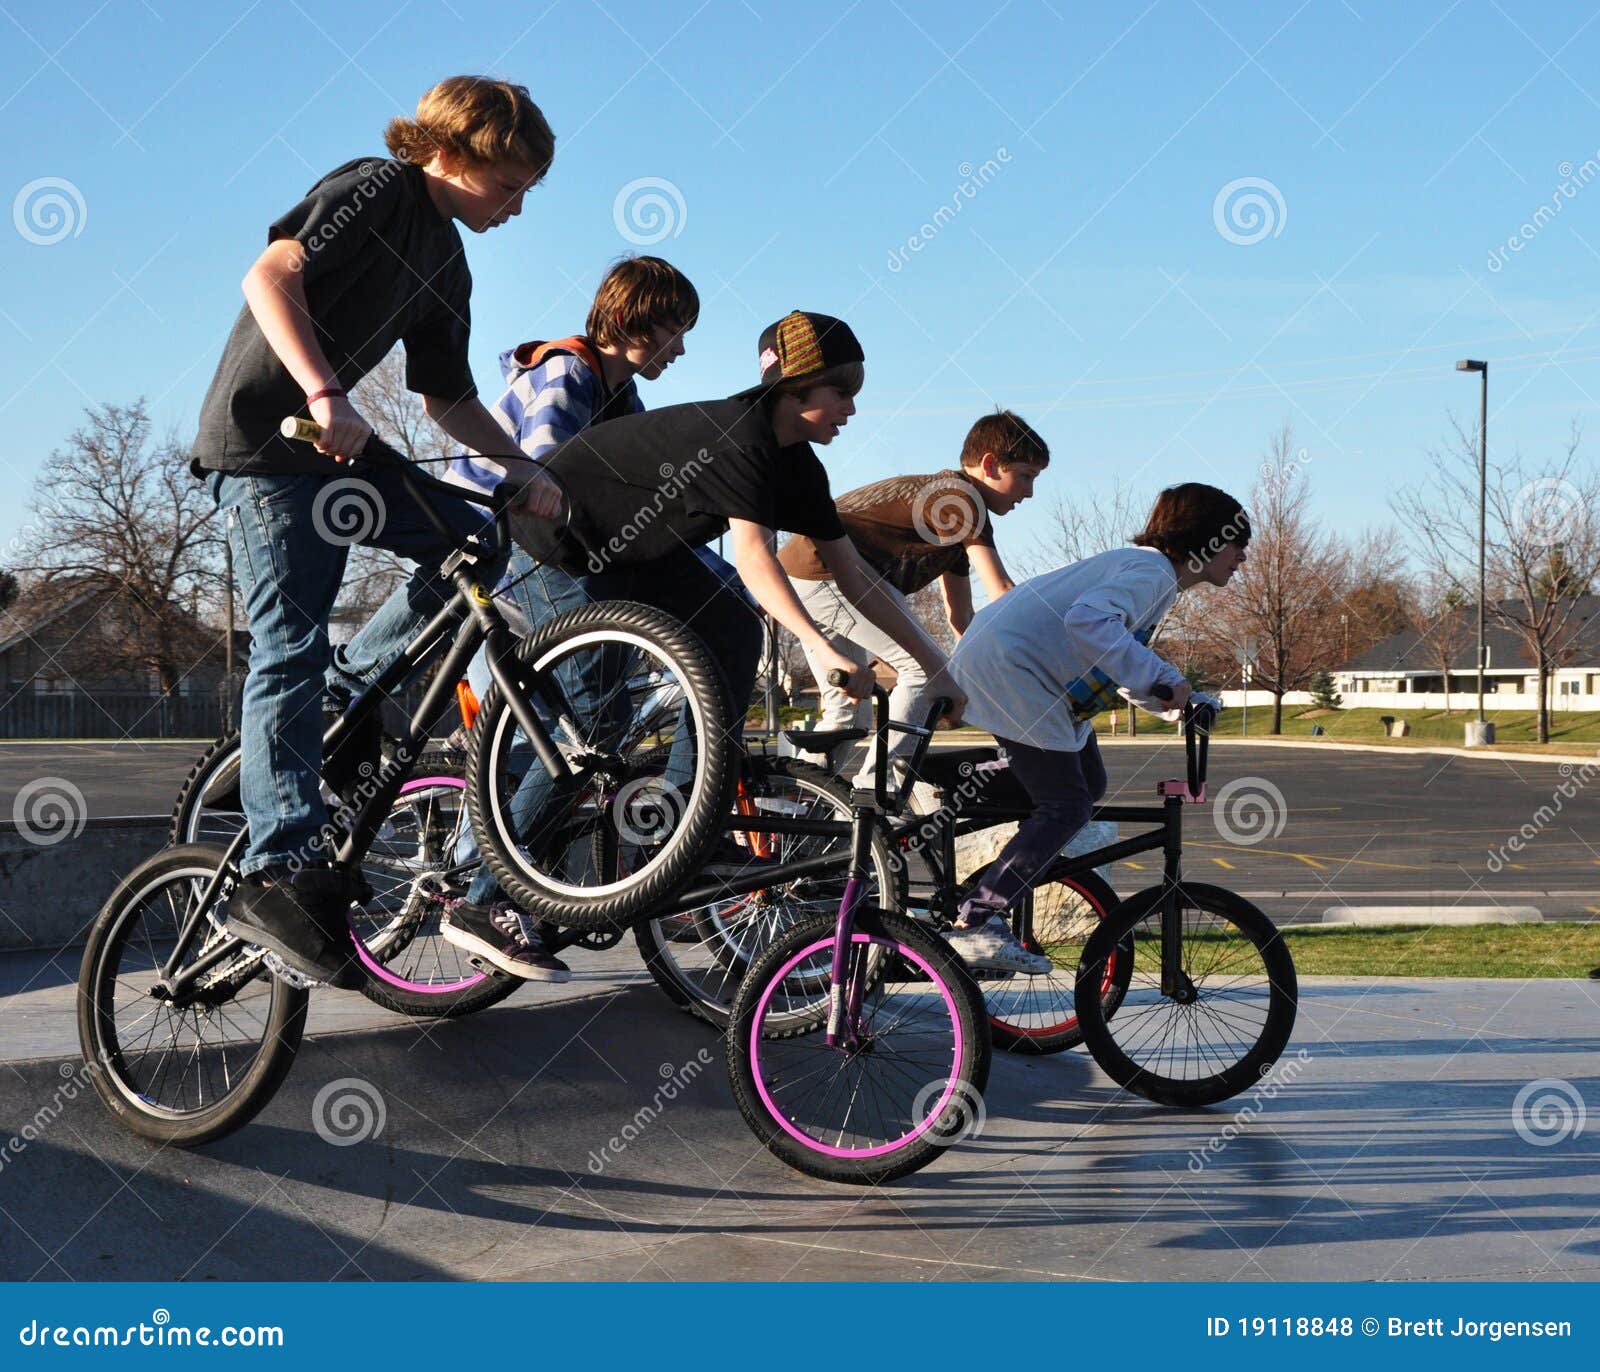 Download Teenage Boys riding Bikes stock photo. Image of boys - 19118848